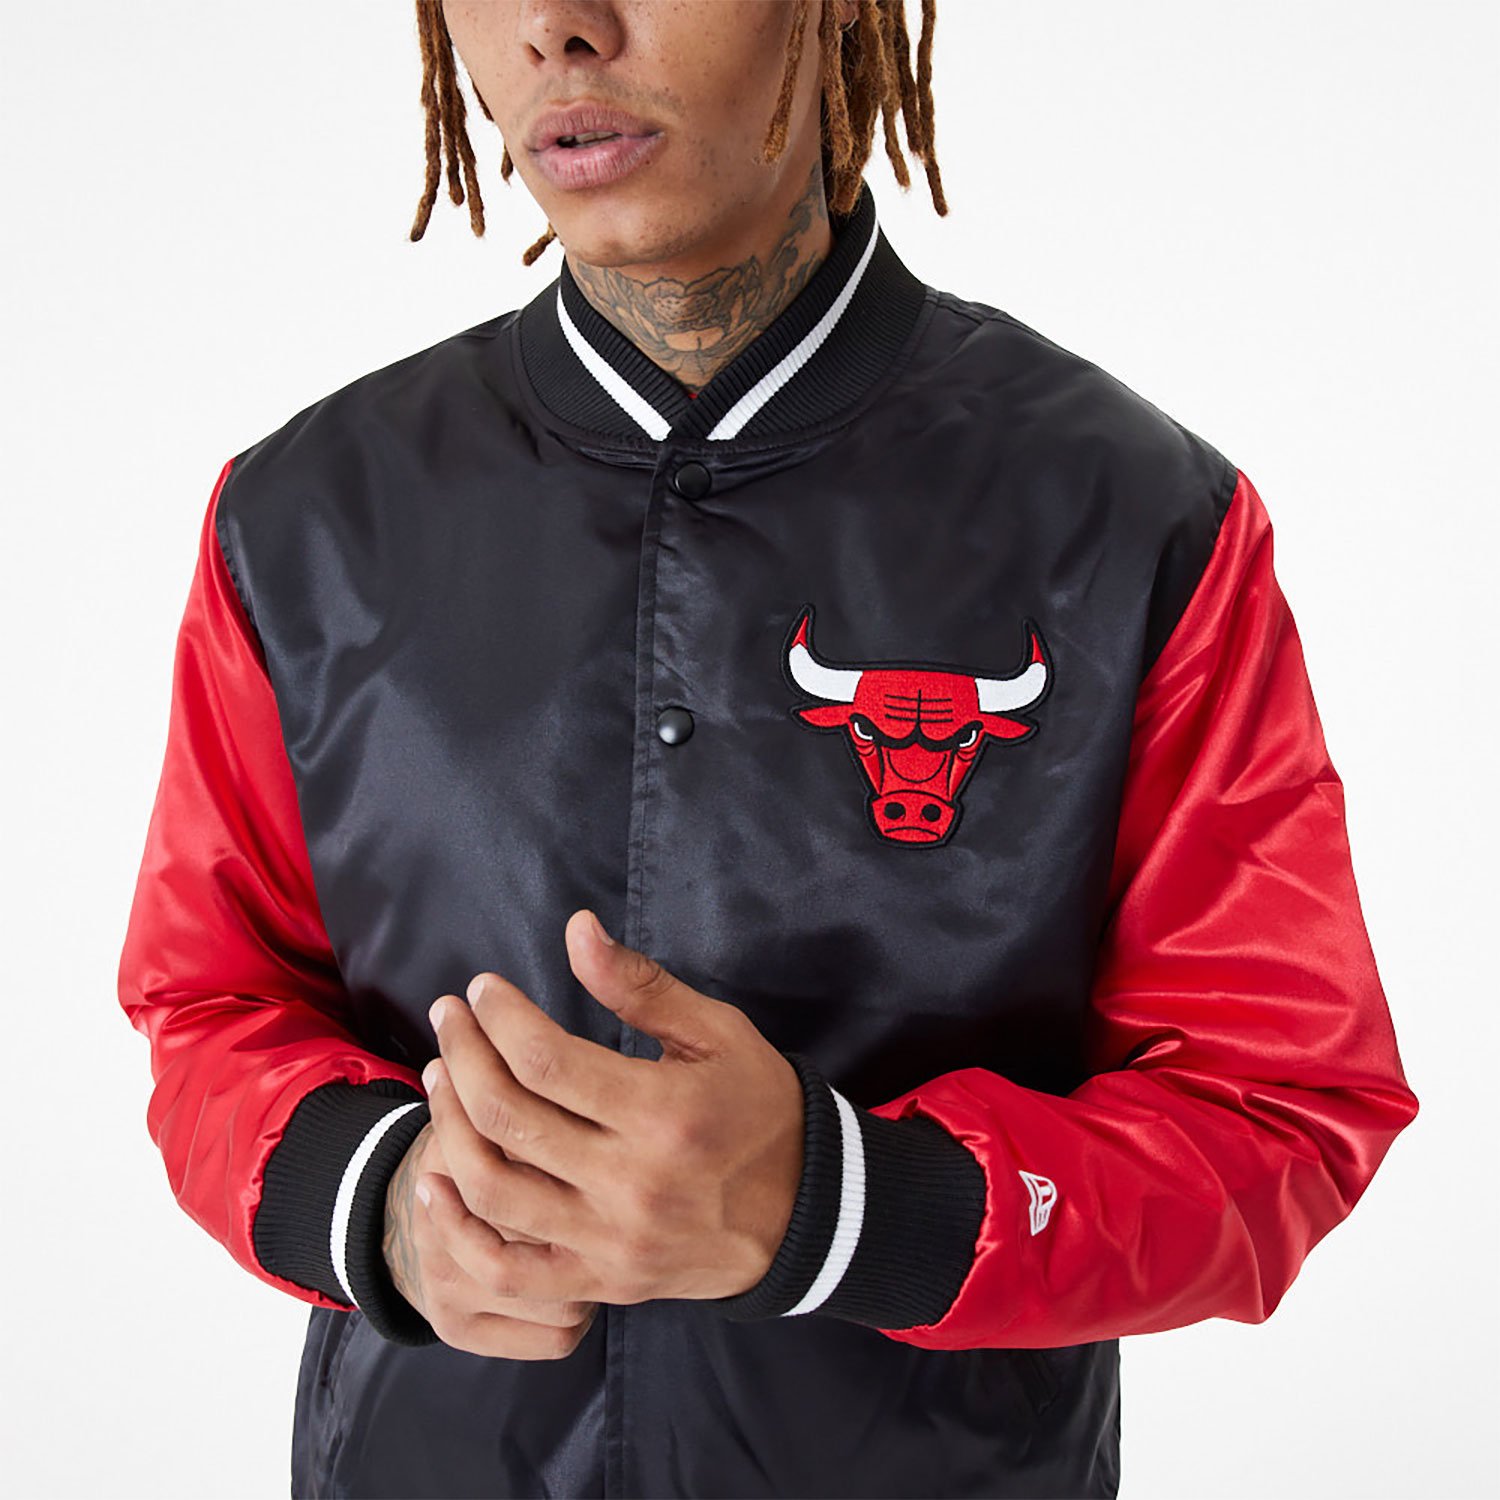 Chicago Bulls NBA Satin Black Bomber Jacket